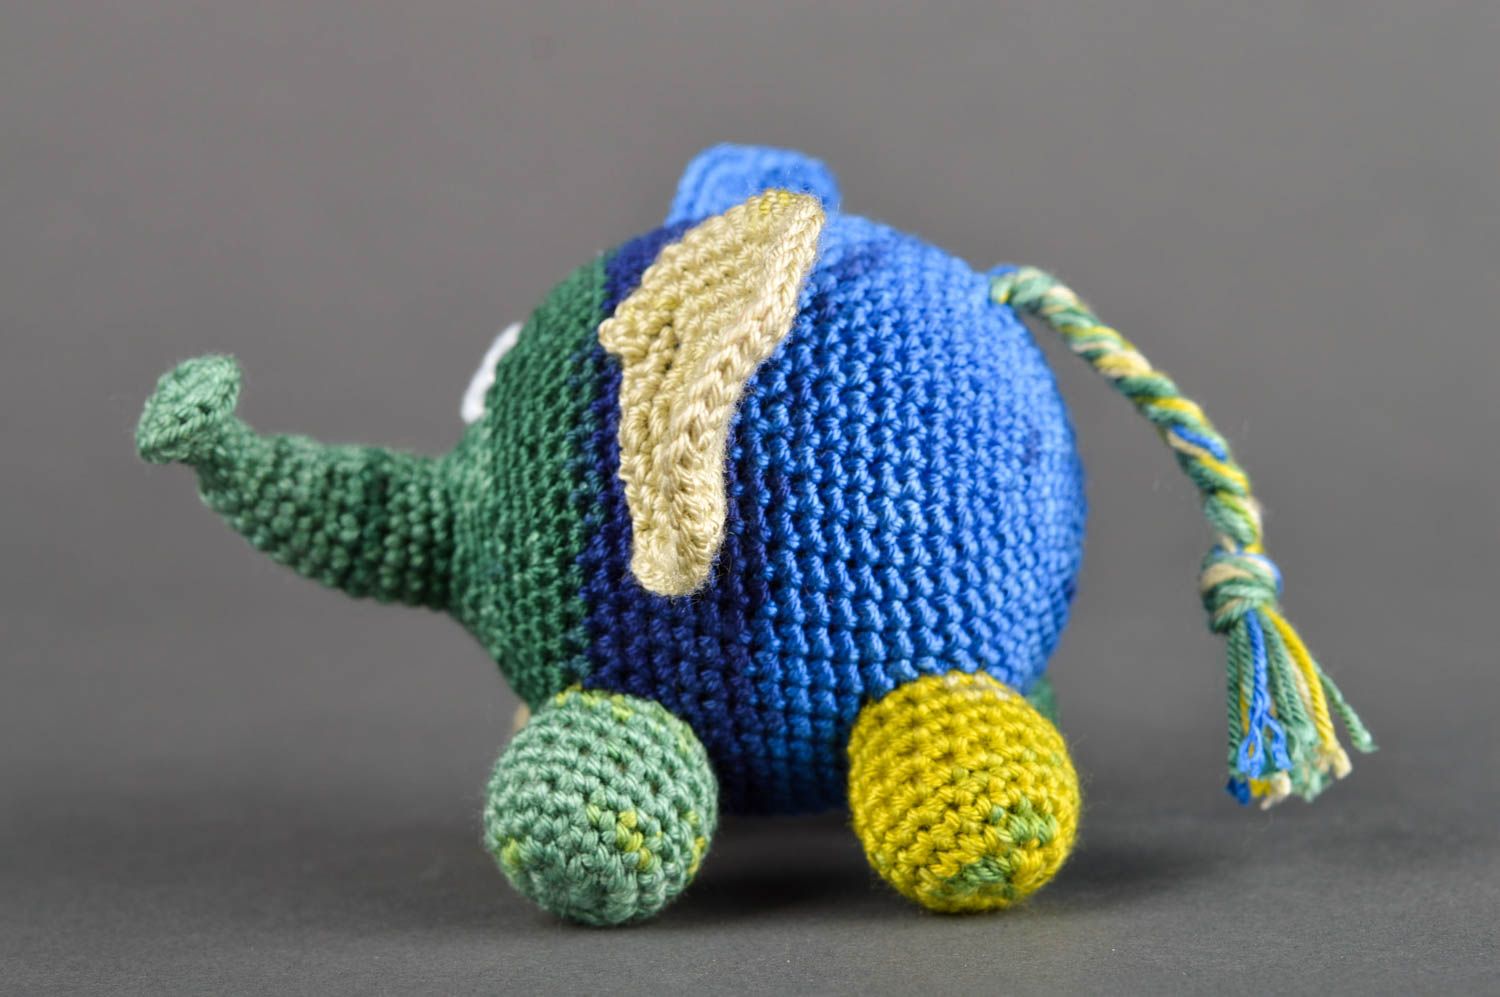 Unusual handmade crochet toy soft childrens toys interior decorating gift ideas photo 3